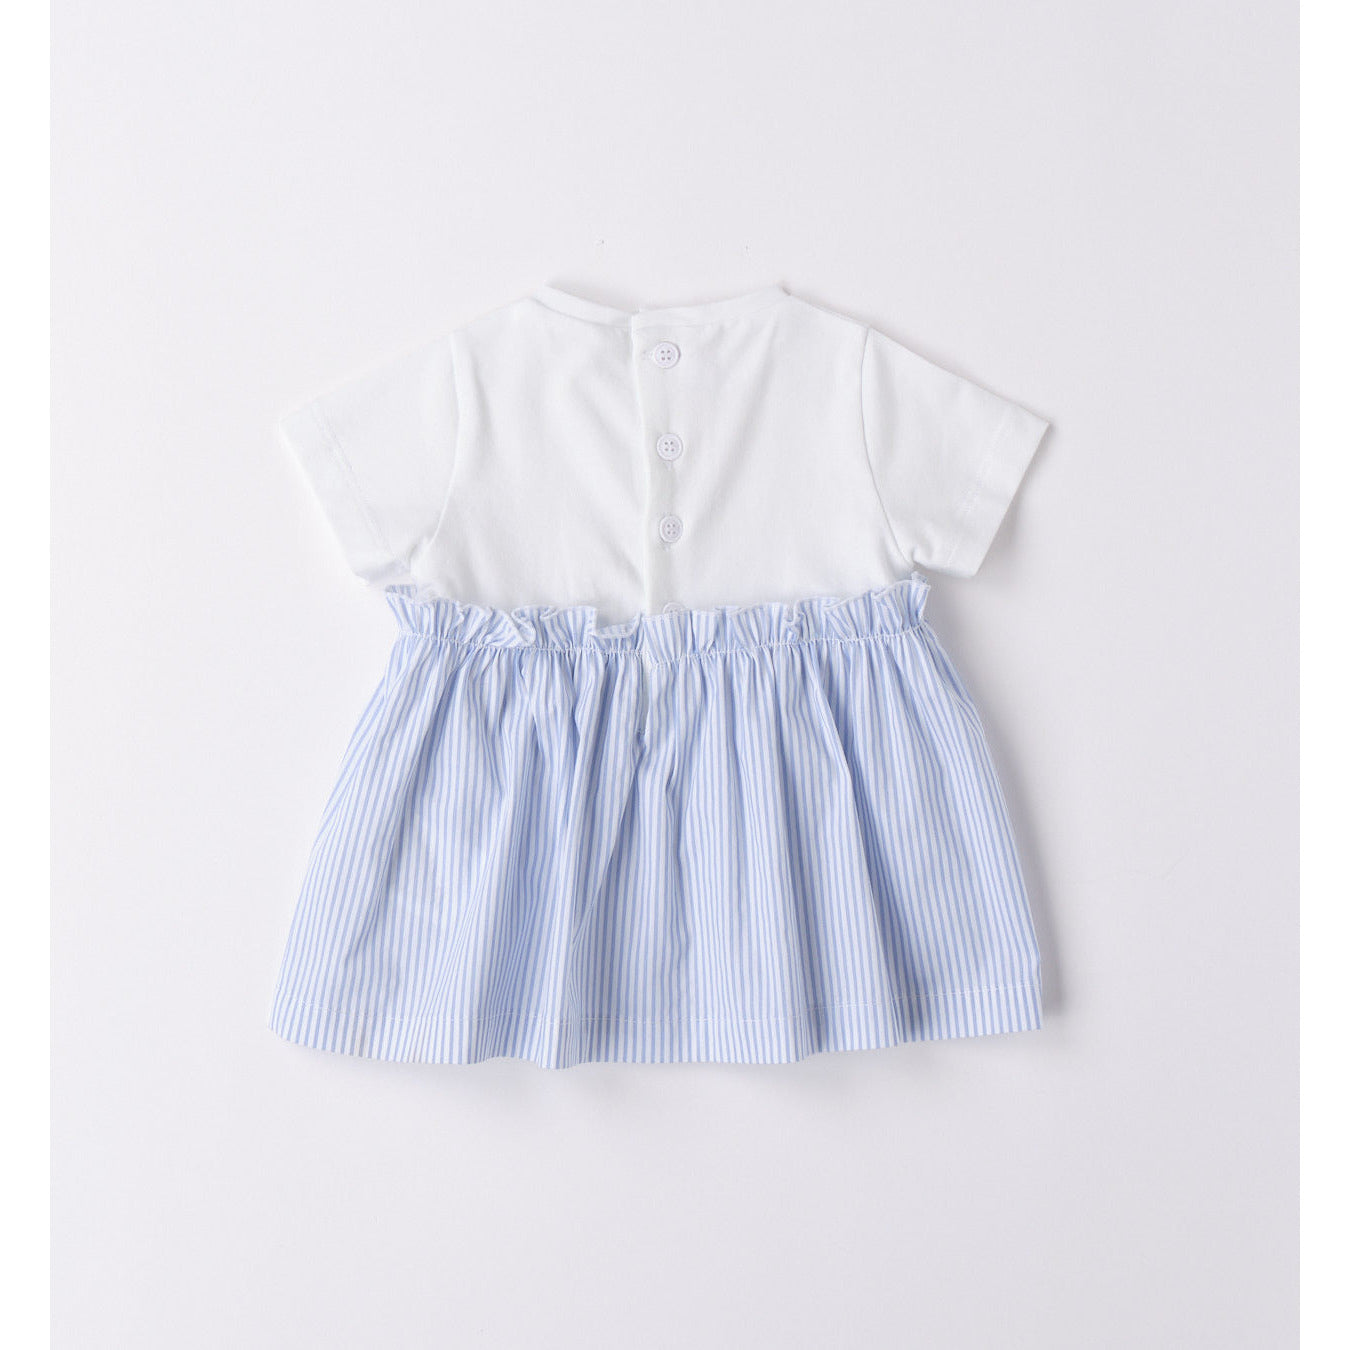 White and Pale Blue Striped Dress 111 - Lala Kids 